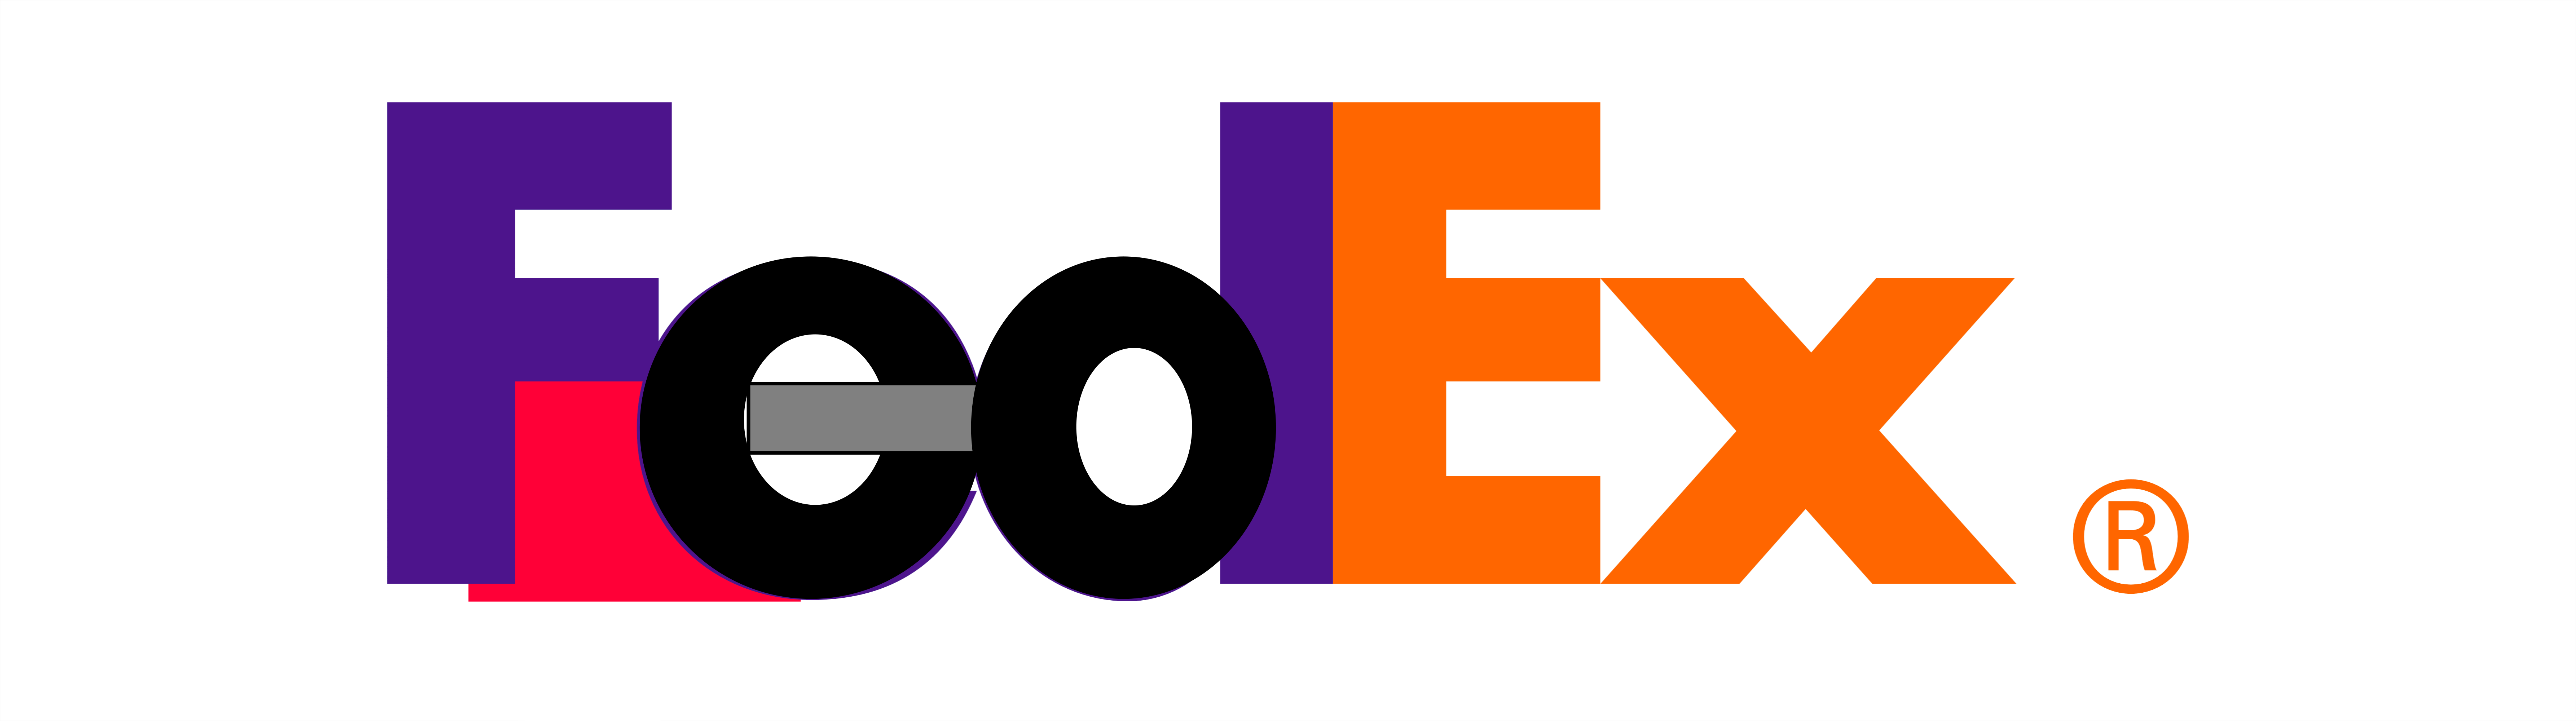 FedEx logo other hidden symbols.